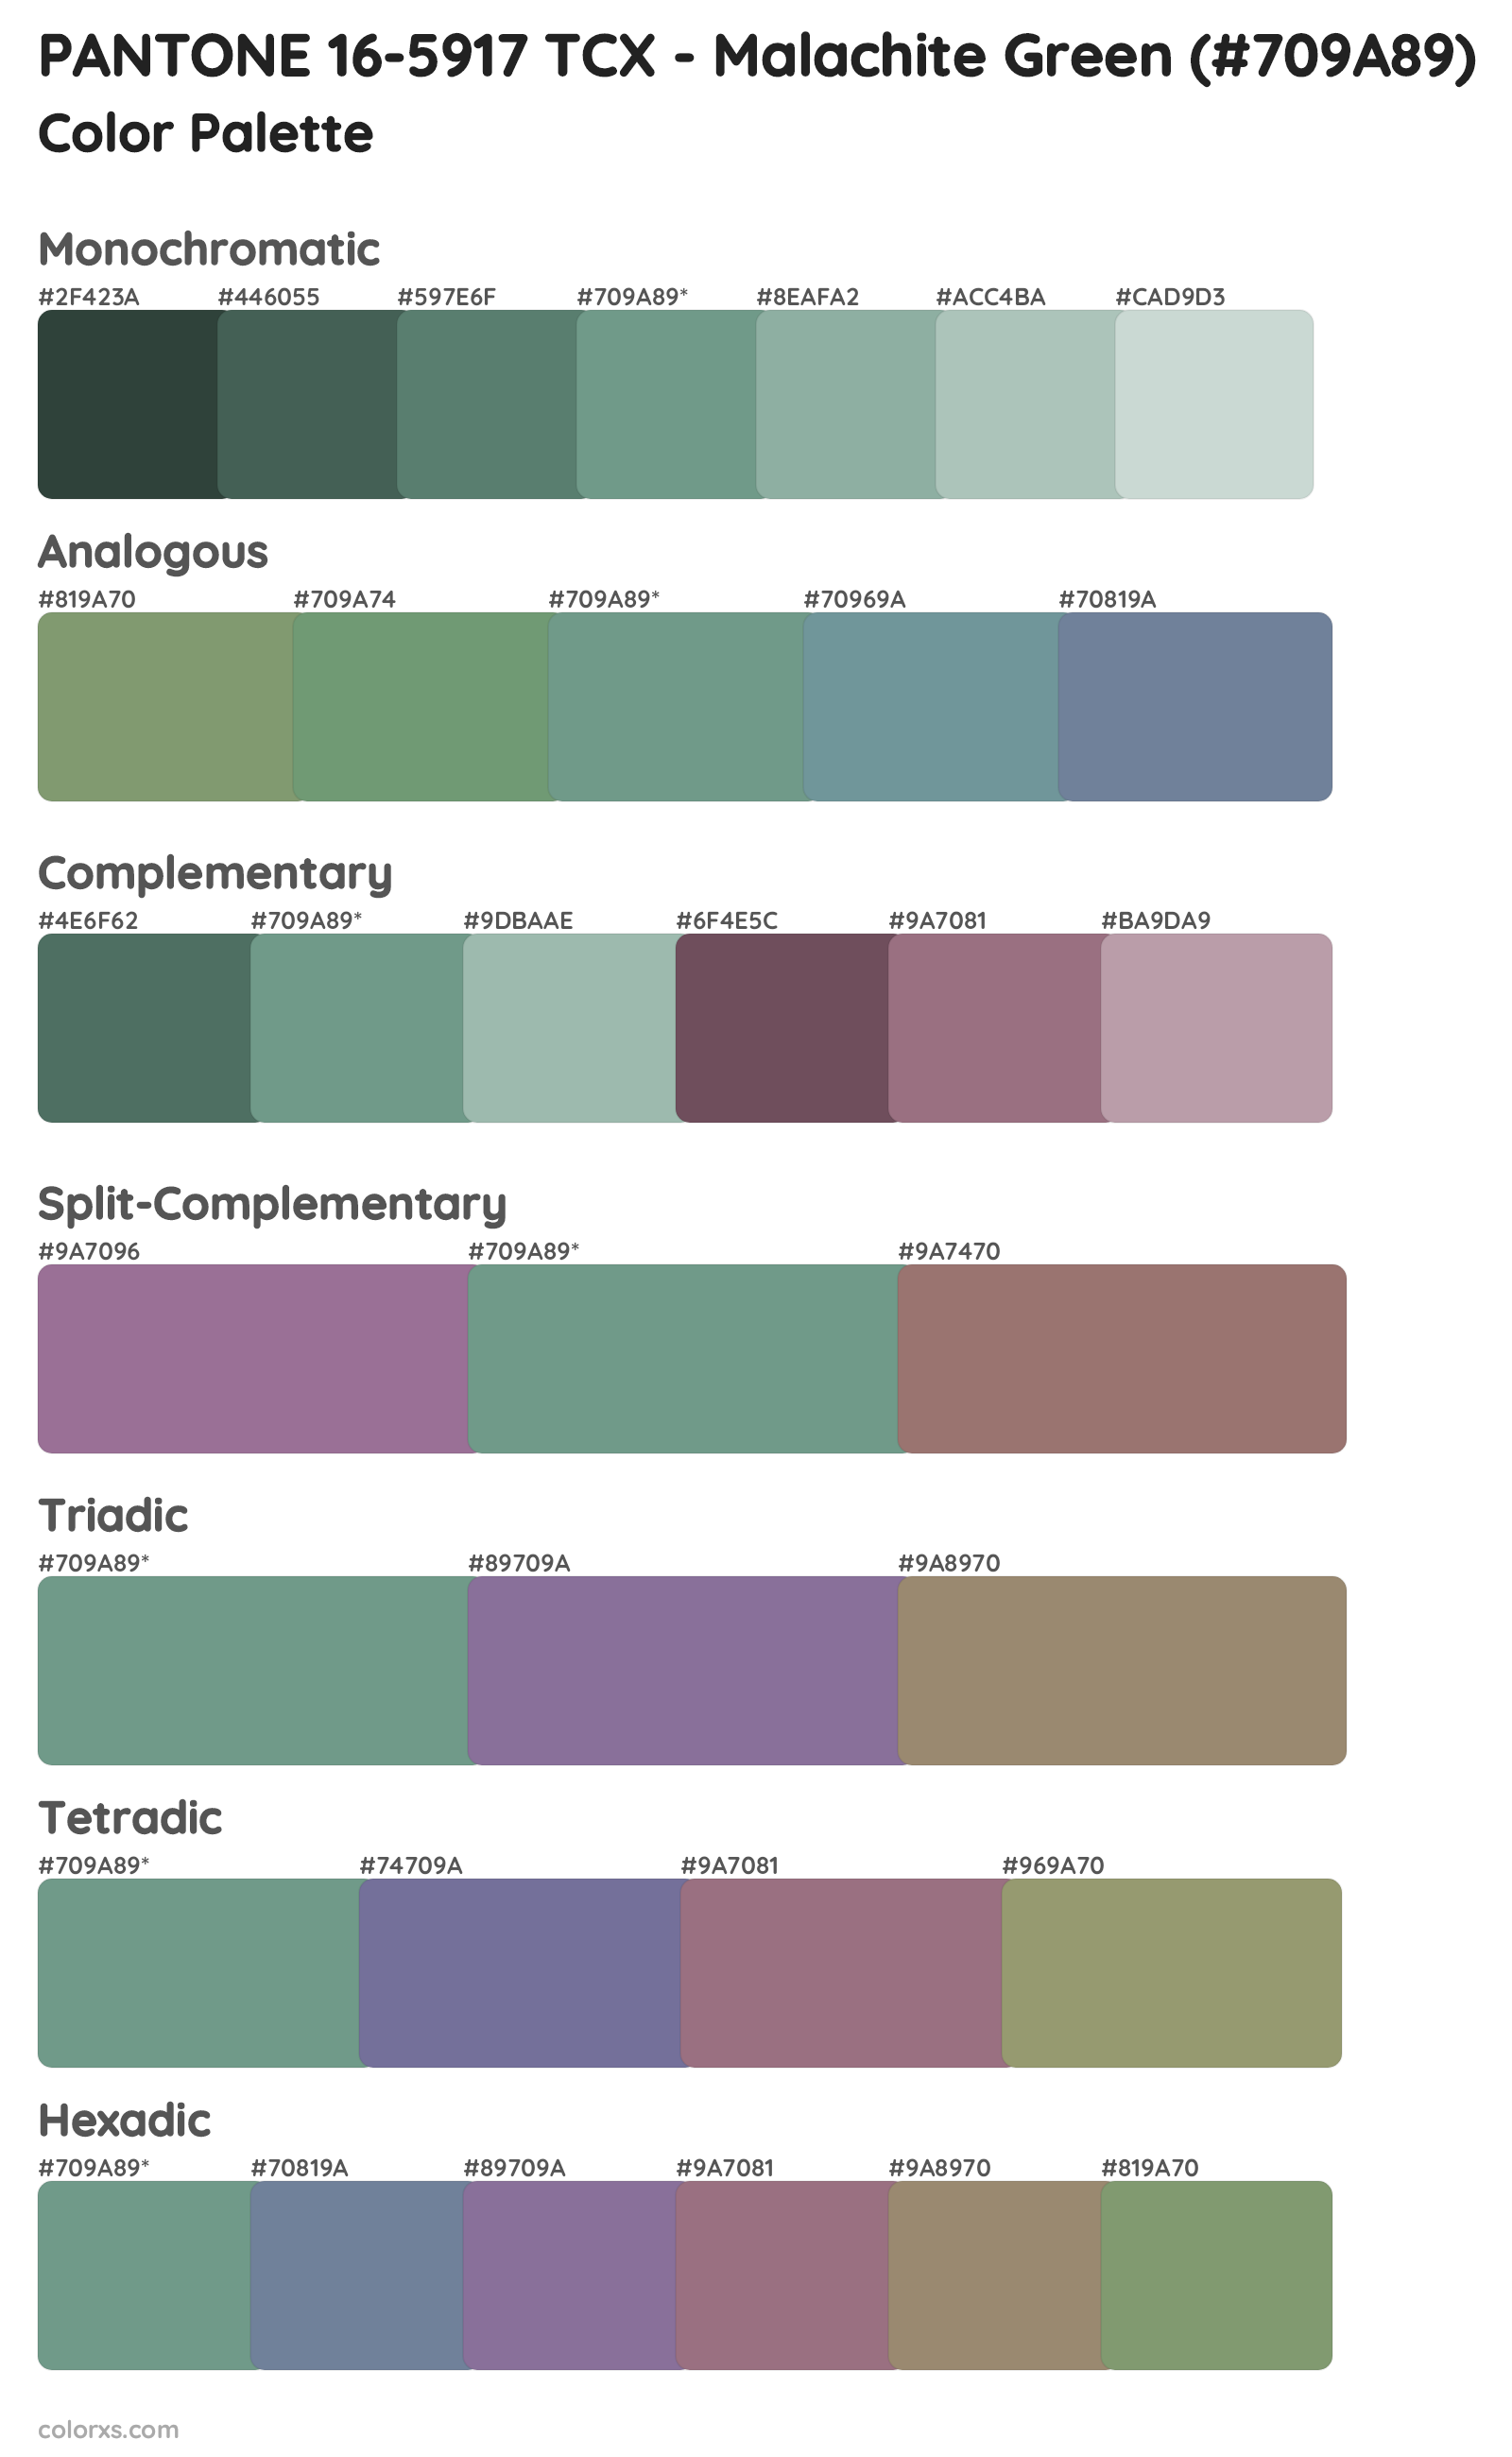 PANTONE 16-5917 TCX - Malachite Green Color Scheme Palettes